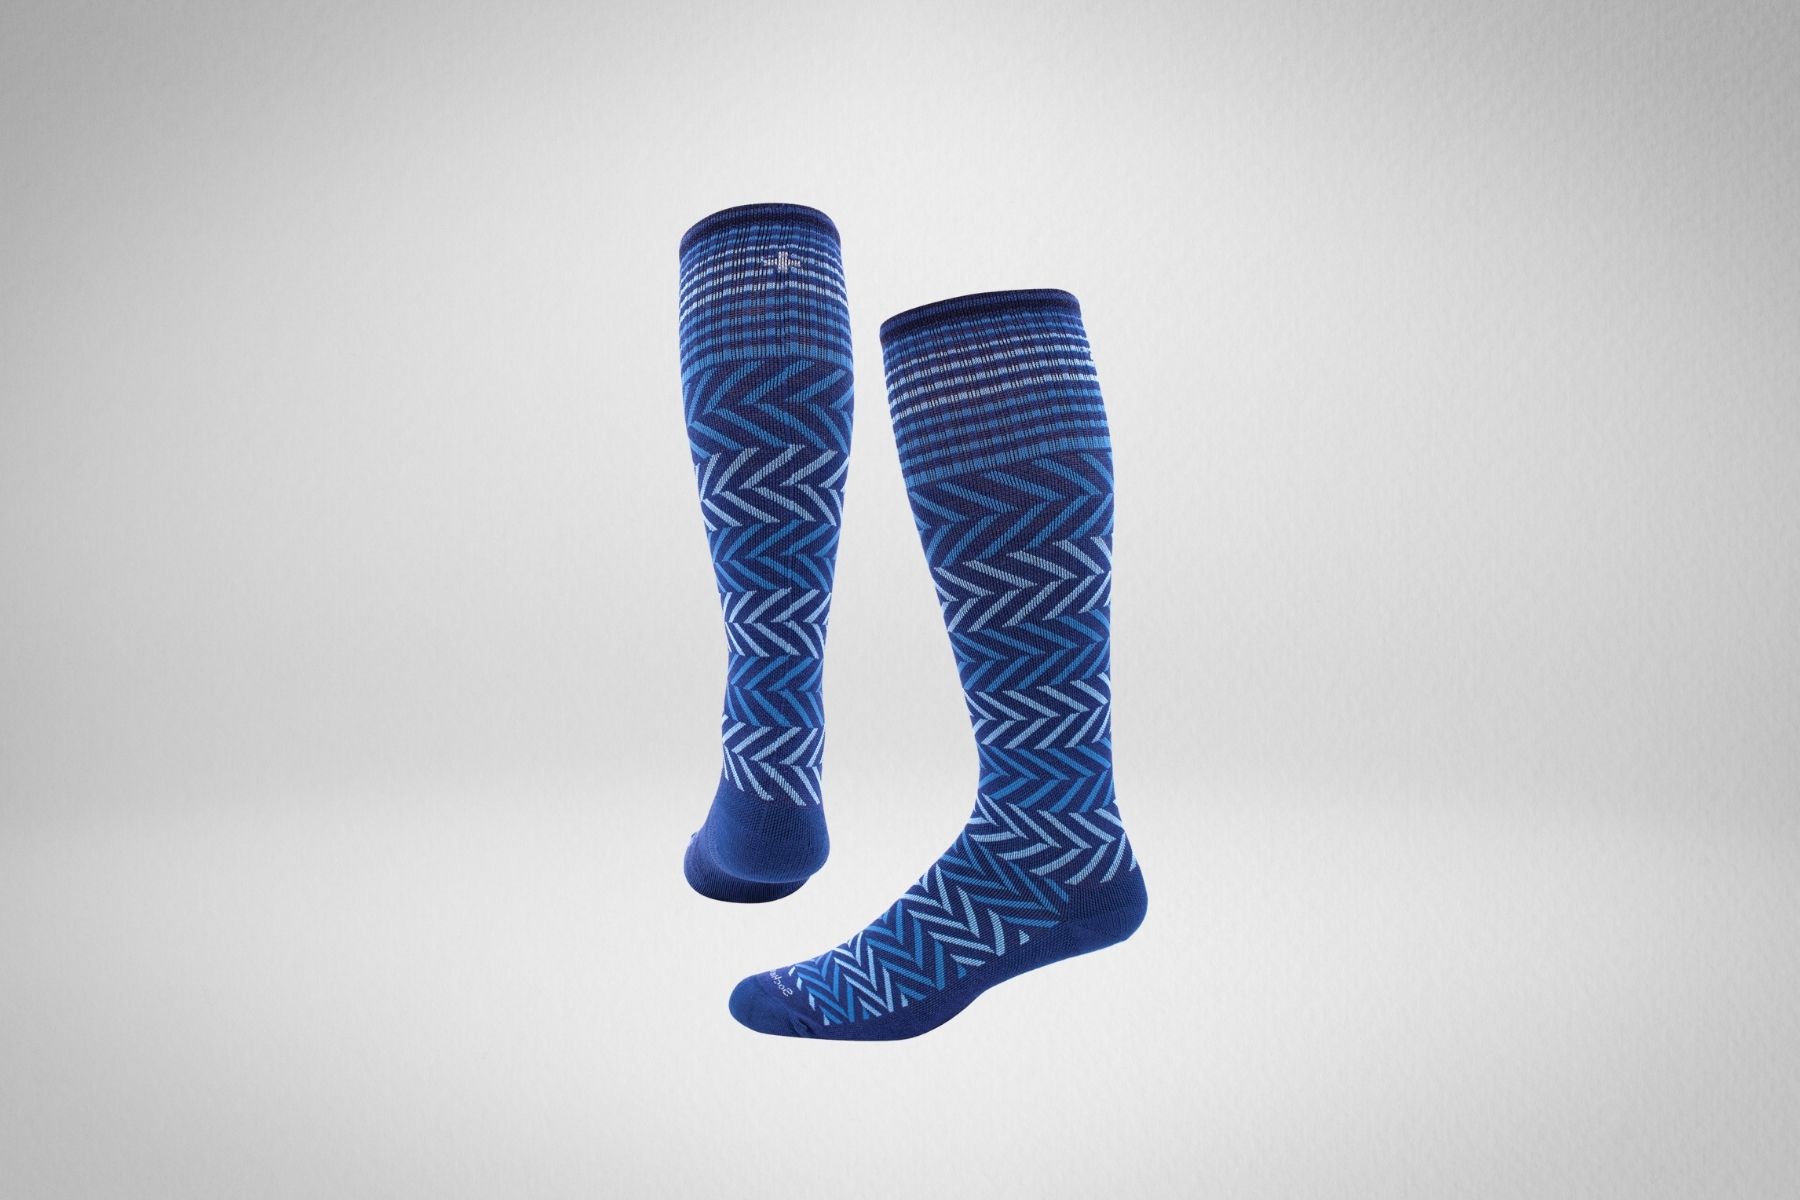 Sockwell Compression Socks Reviews